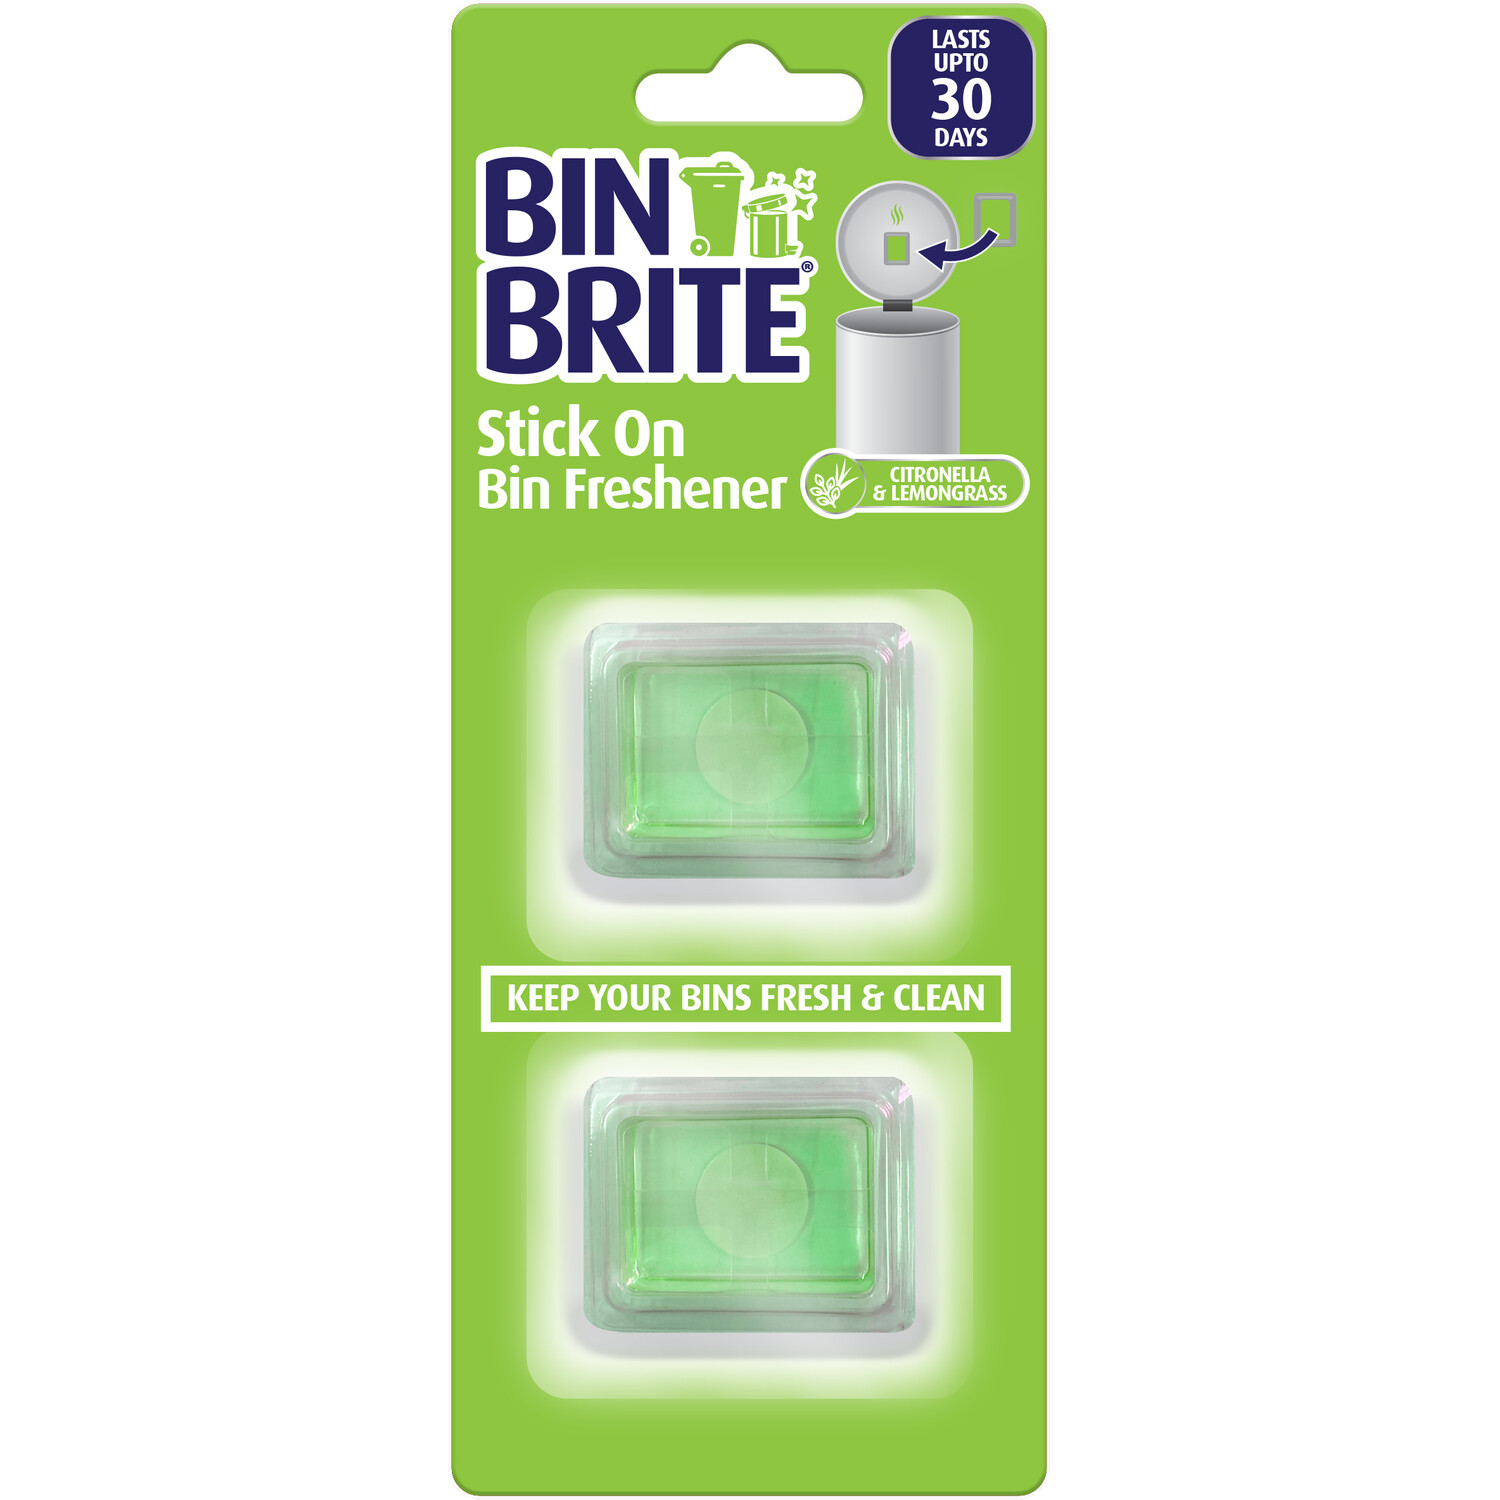 Bin Brite Stick On Bin Freshener - Citronella and Lemongrass Image